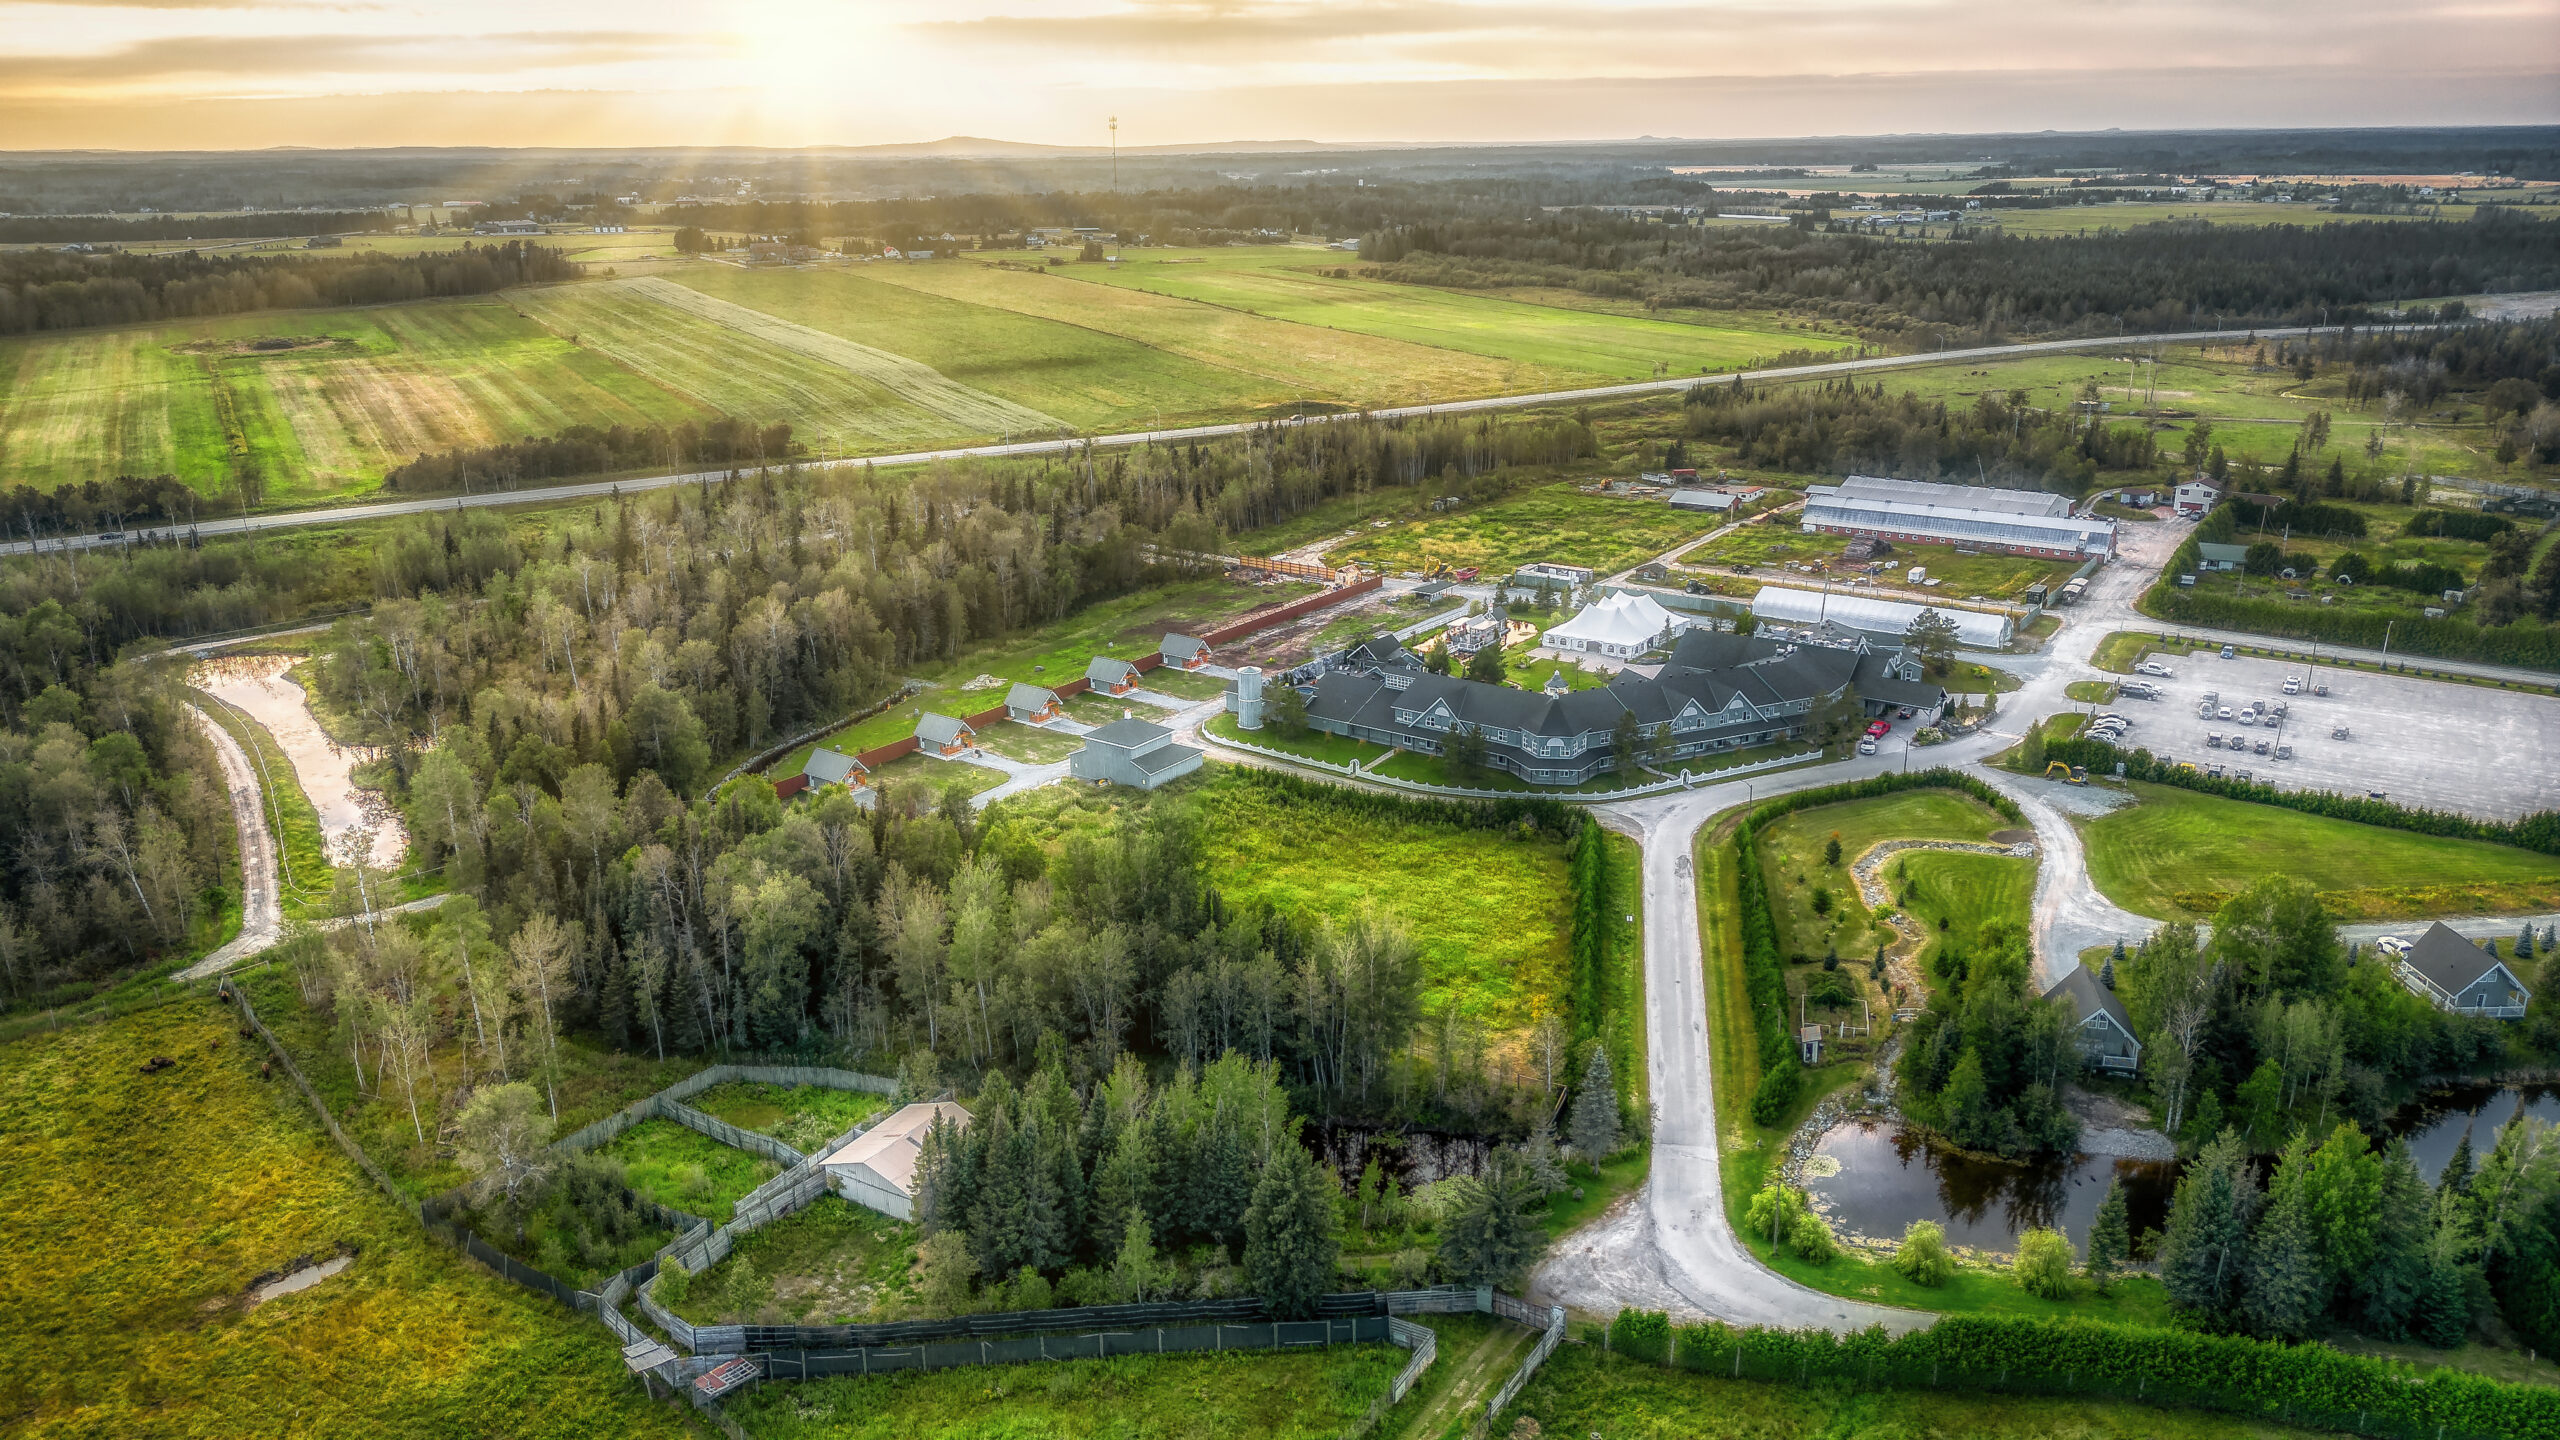 Cedar Meadows Spa & Resort An aerial view of a farm in the countryside near Timmins, Ontario. - Timmins, Ontario